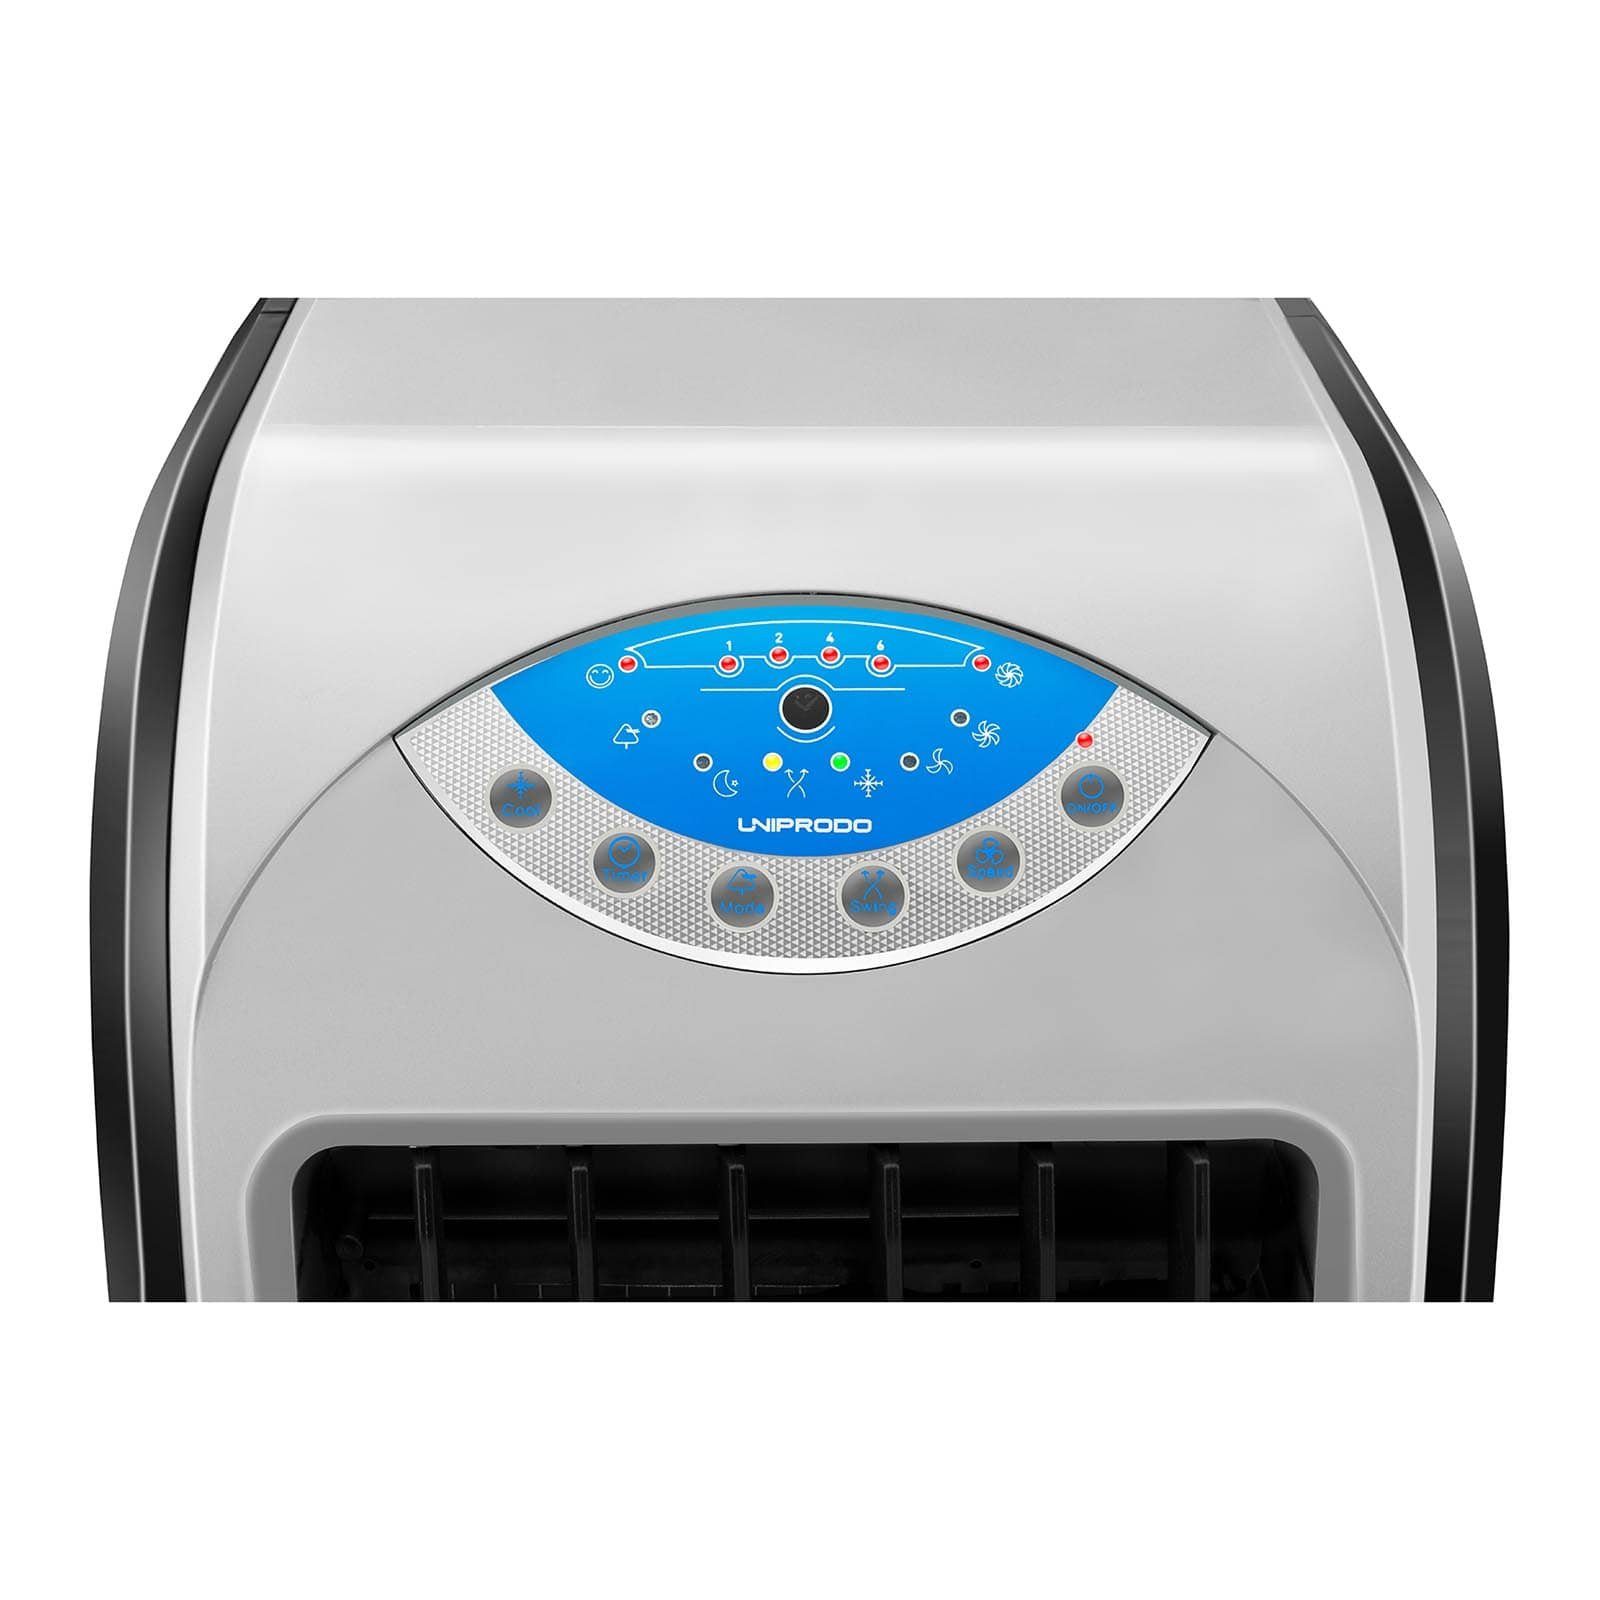 Ventilatorkombigerät - Wassertank mit L 1 - Uniprodo 4 6 in Heizfunktion mobil Luftkühler